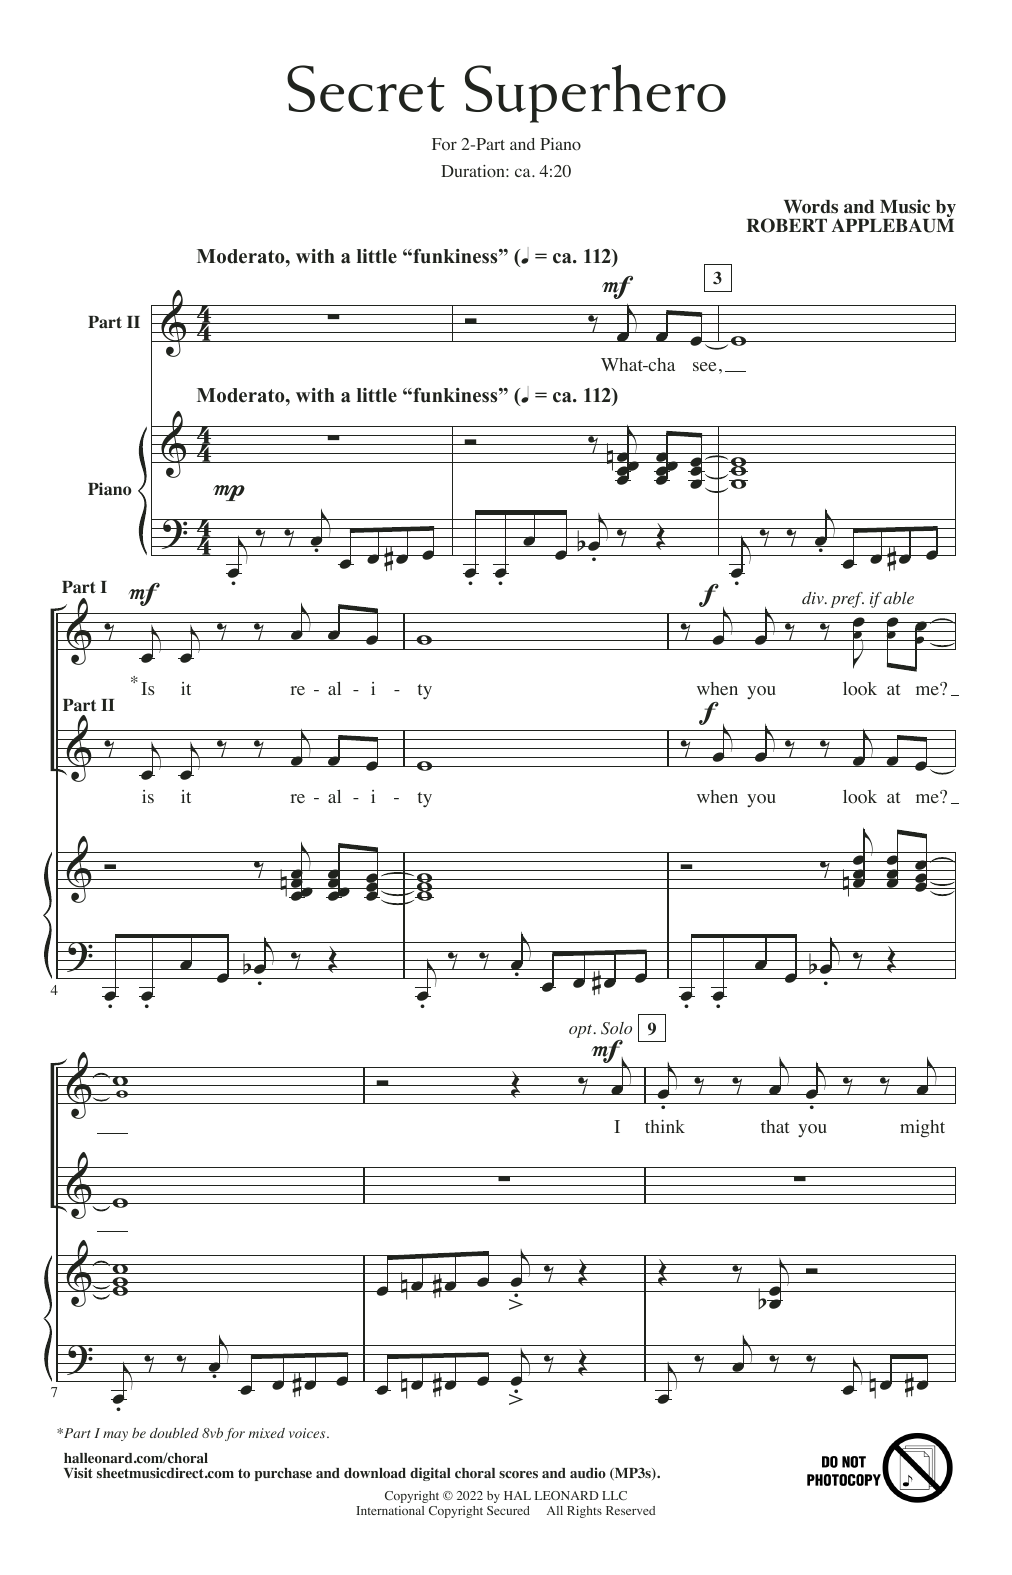 Download Robert Applebaum Secret Superhero Sheet Music and learn how to play 2-Part Choir PDF digital score in minutes